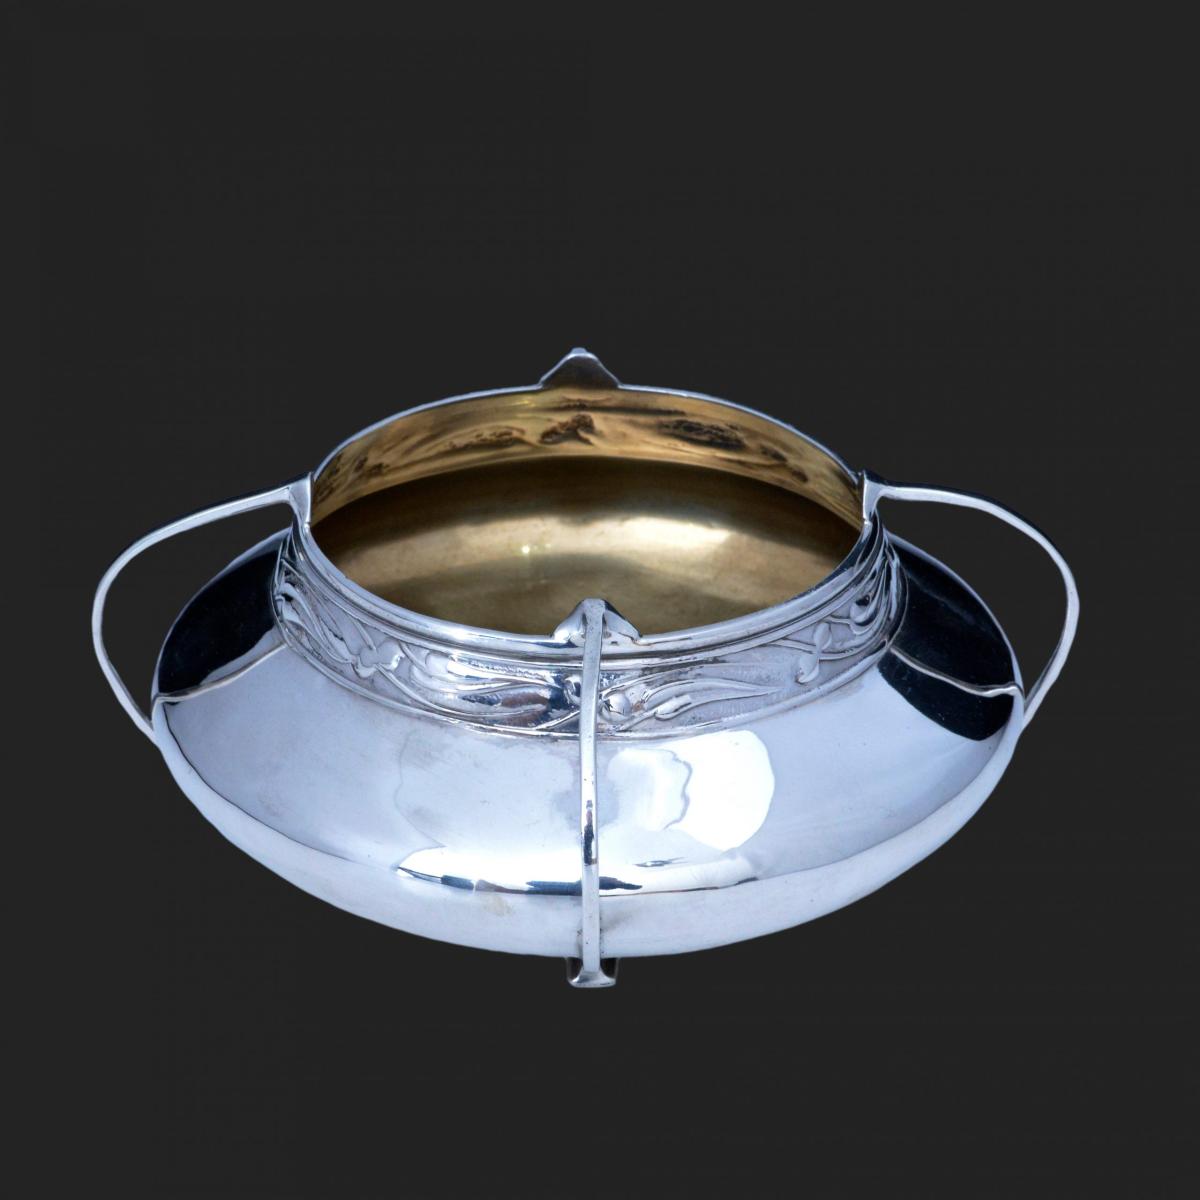 Cymric silver bowl